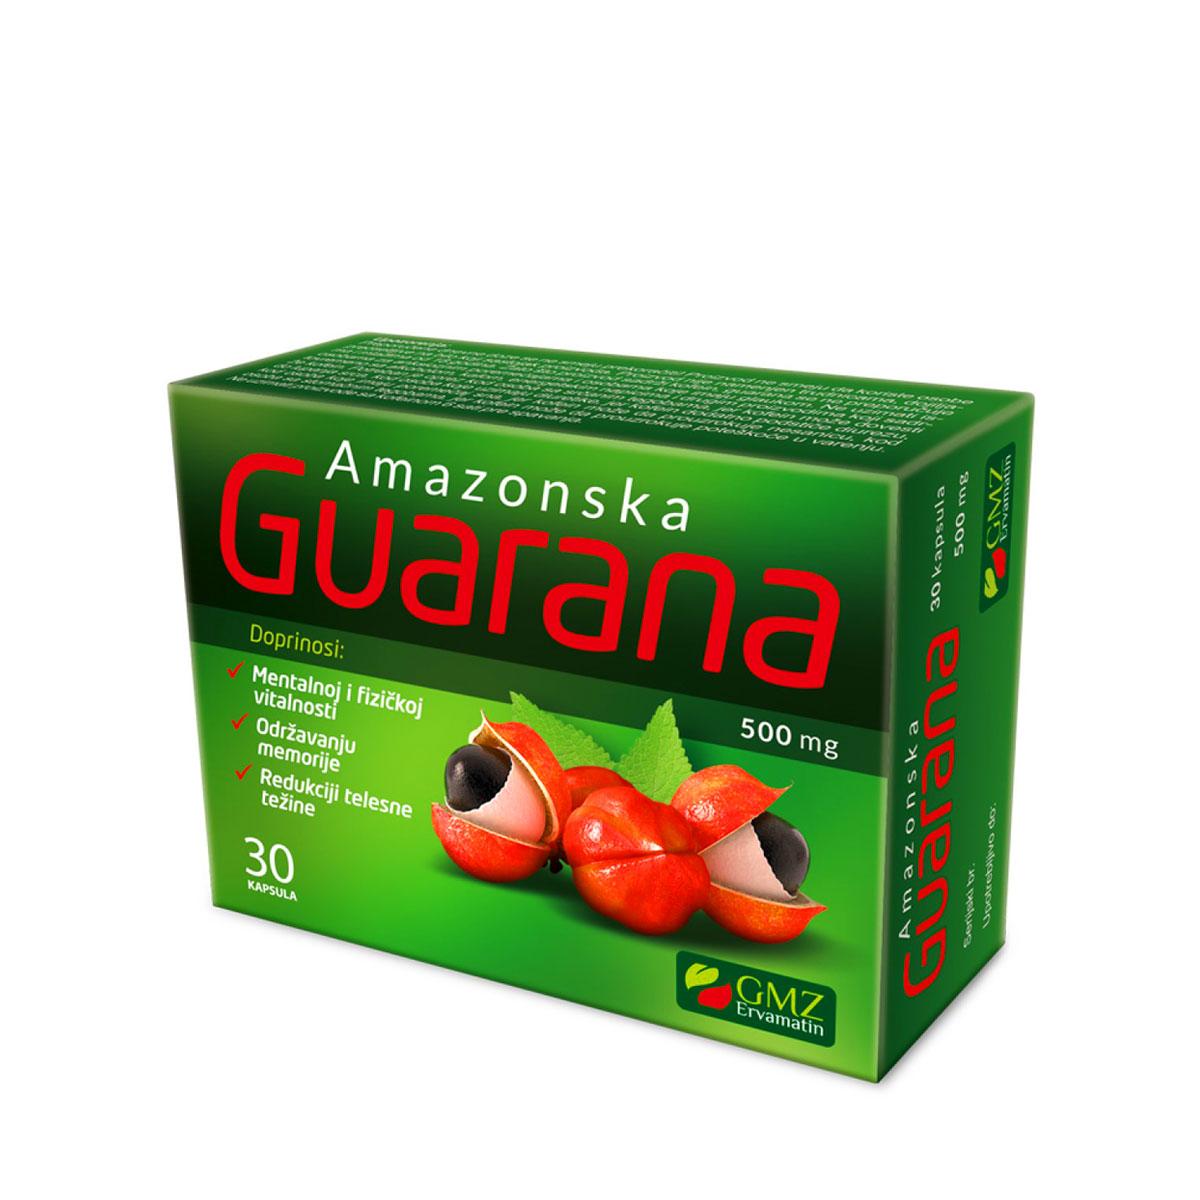 Selected image for GMZ ERVAMATIN Amazonska Guarana 500mg 30/1 127533